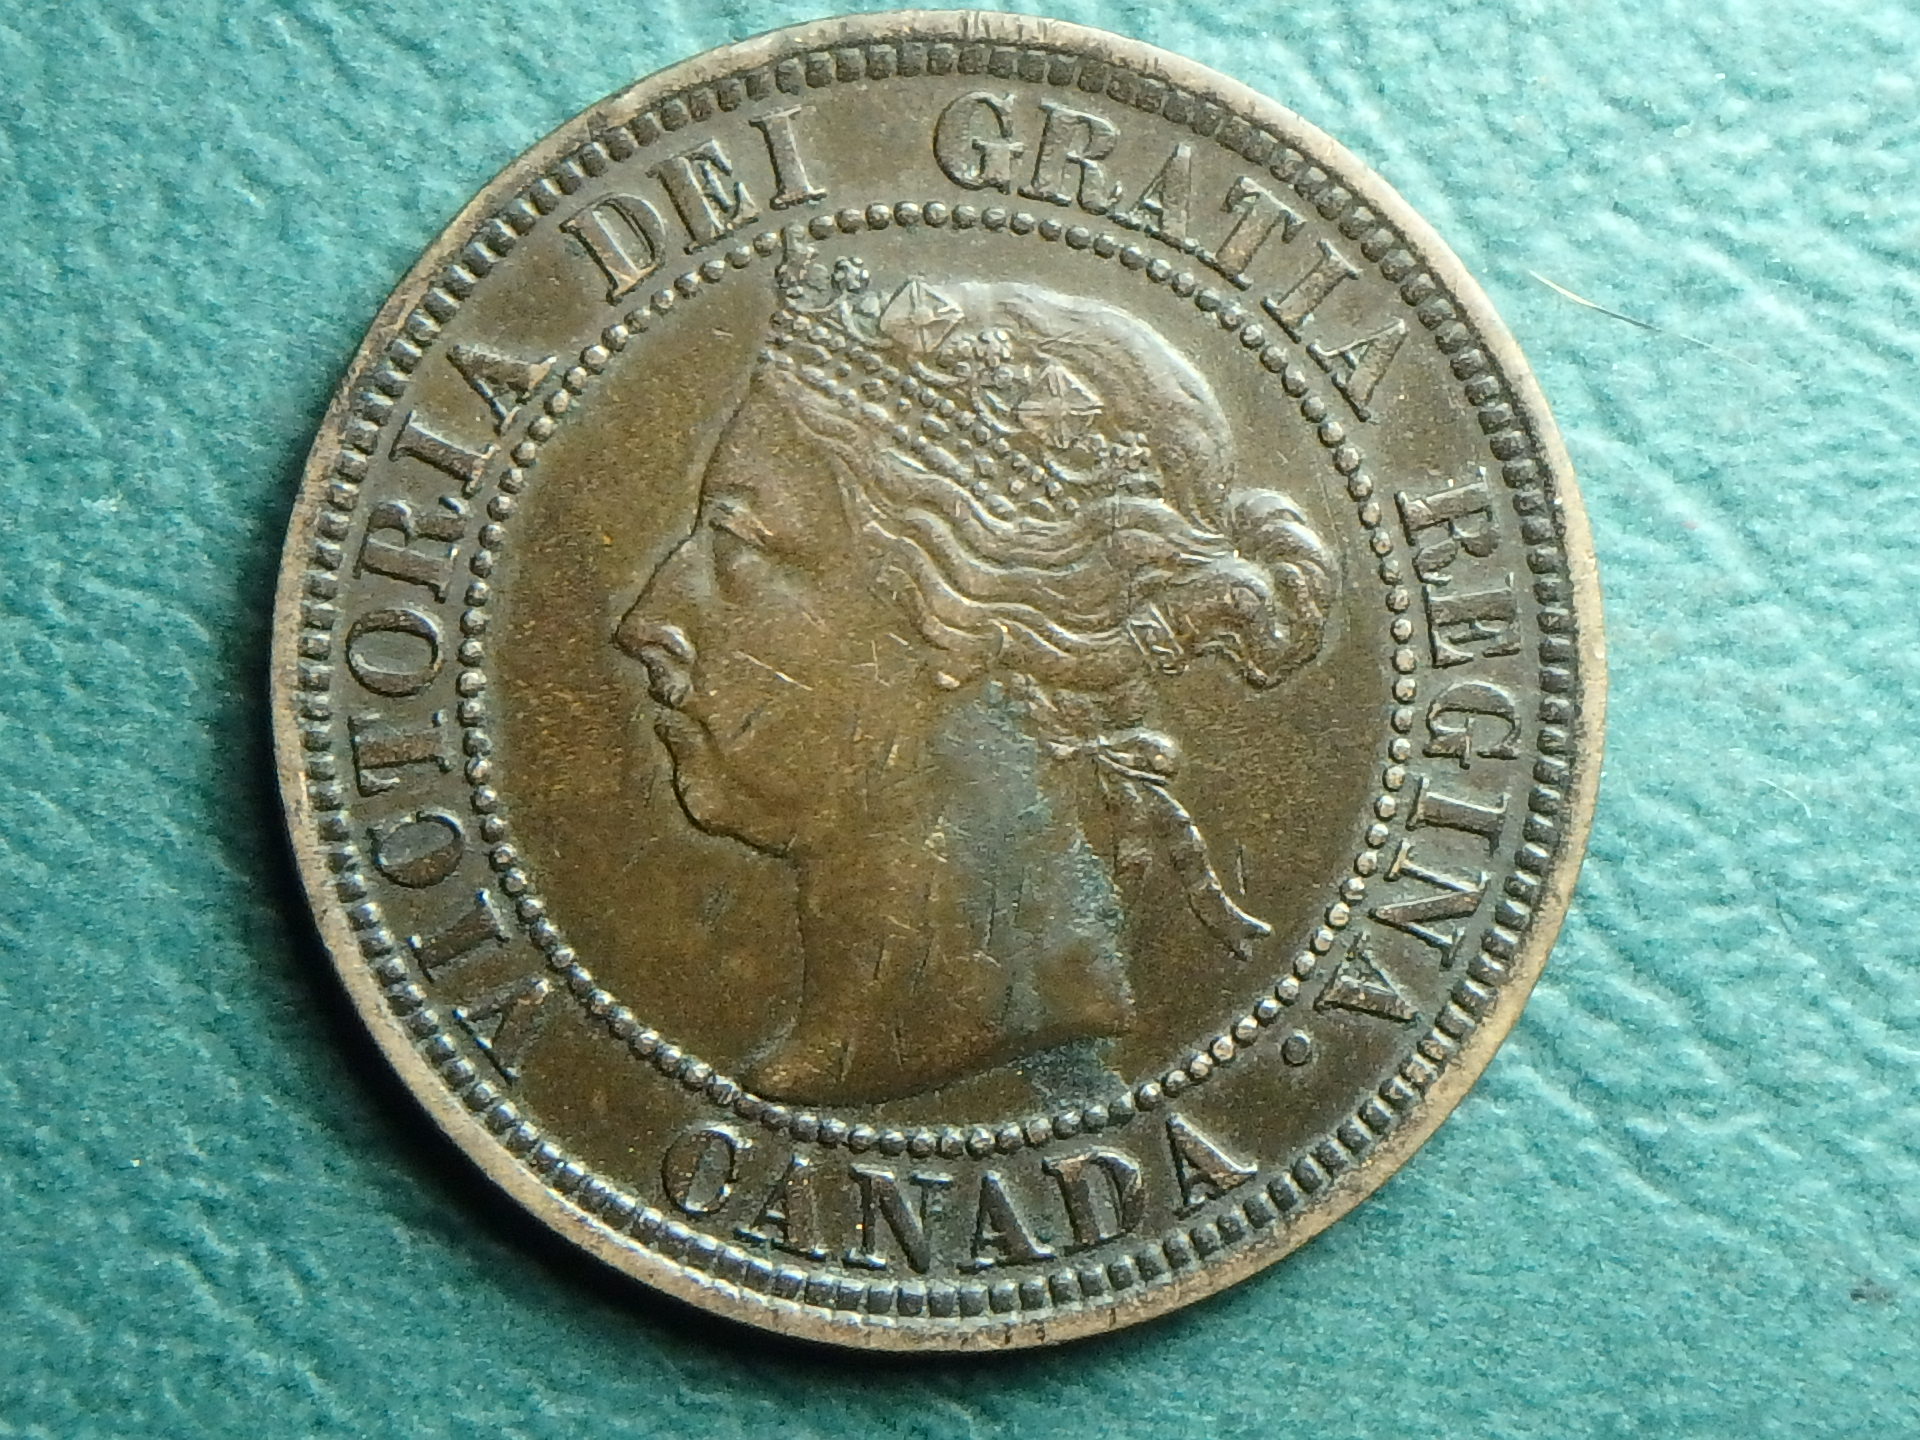 1892 Canada 1 c obv.JPG